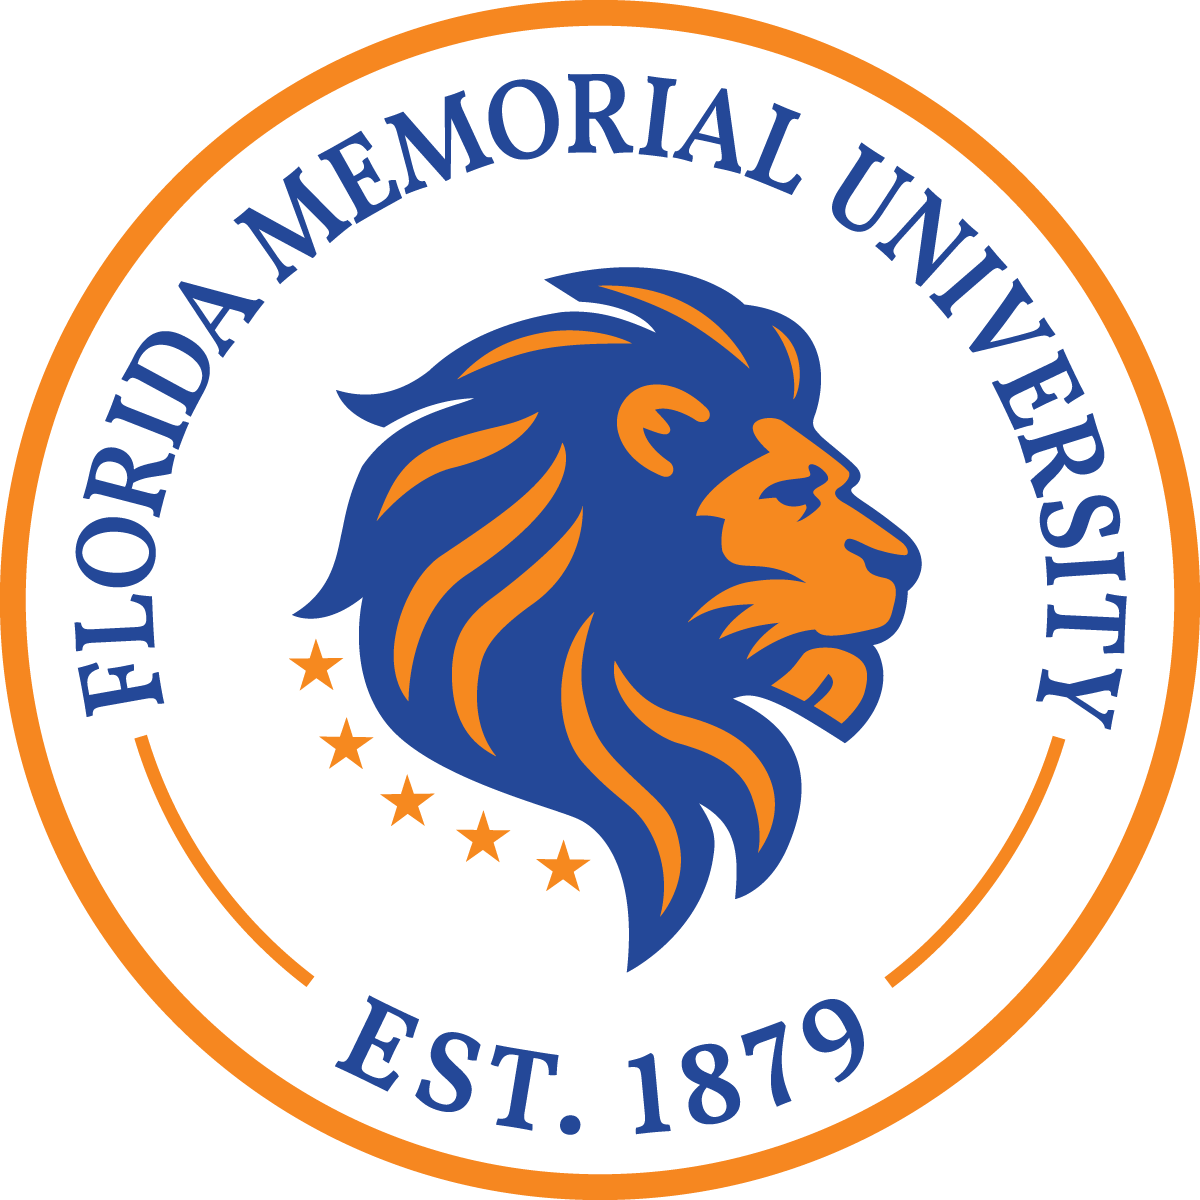 florida memorial university logo fabric transfer